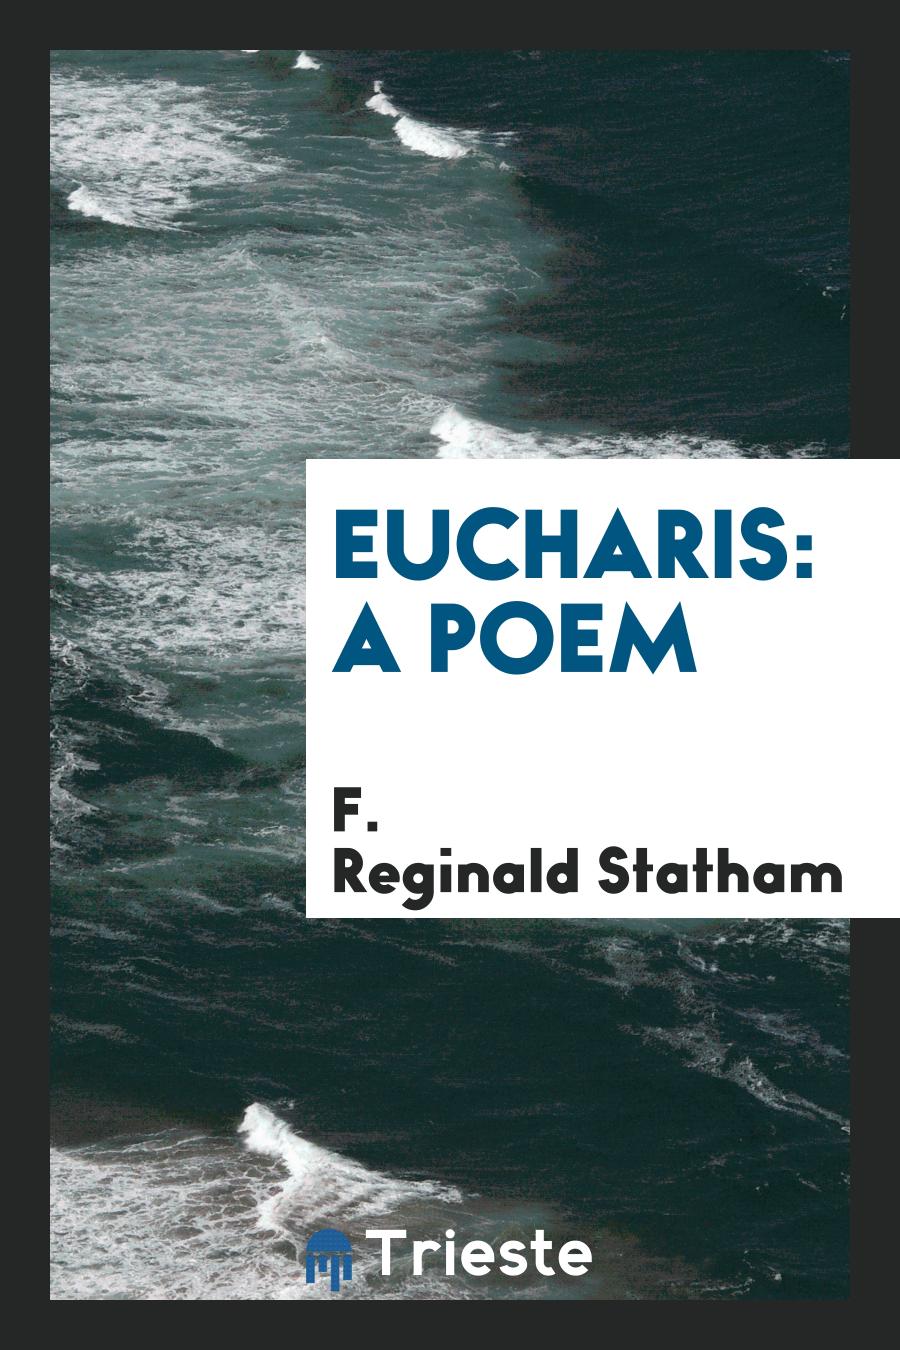 Eucharis: A Poem